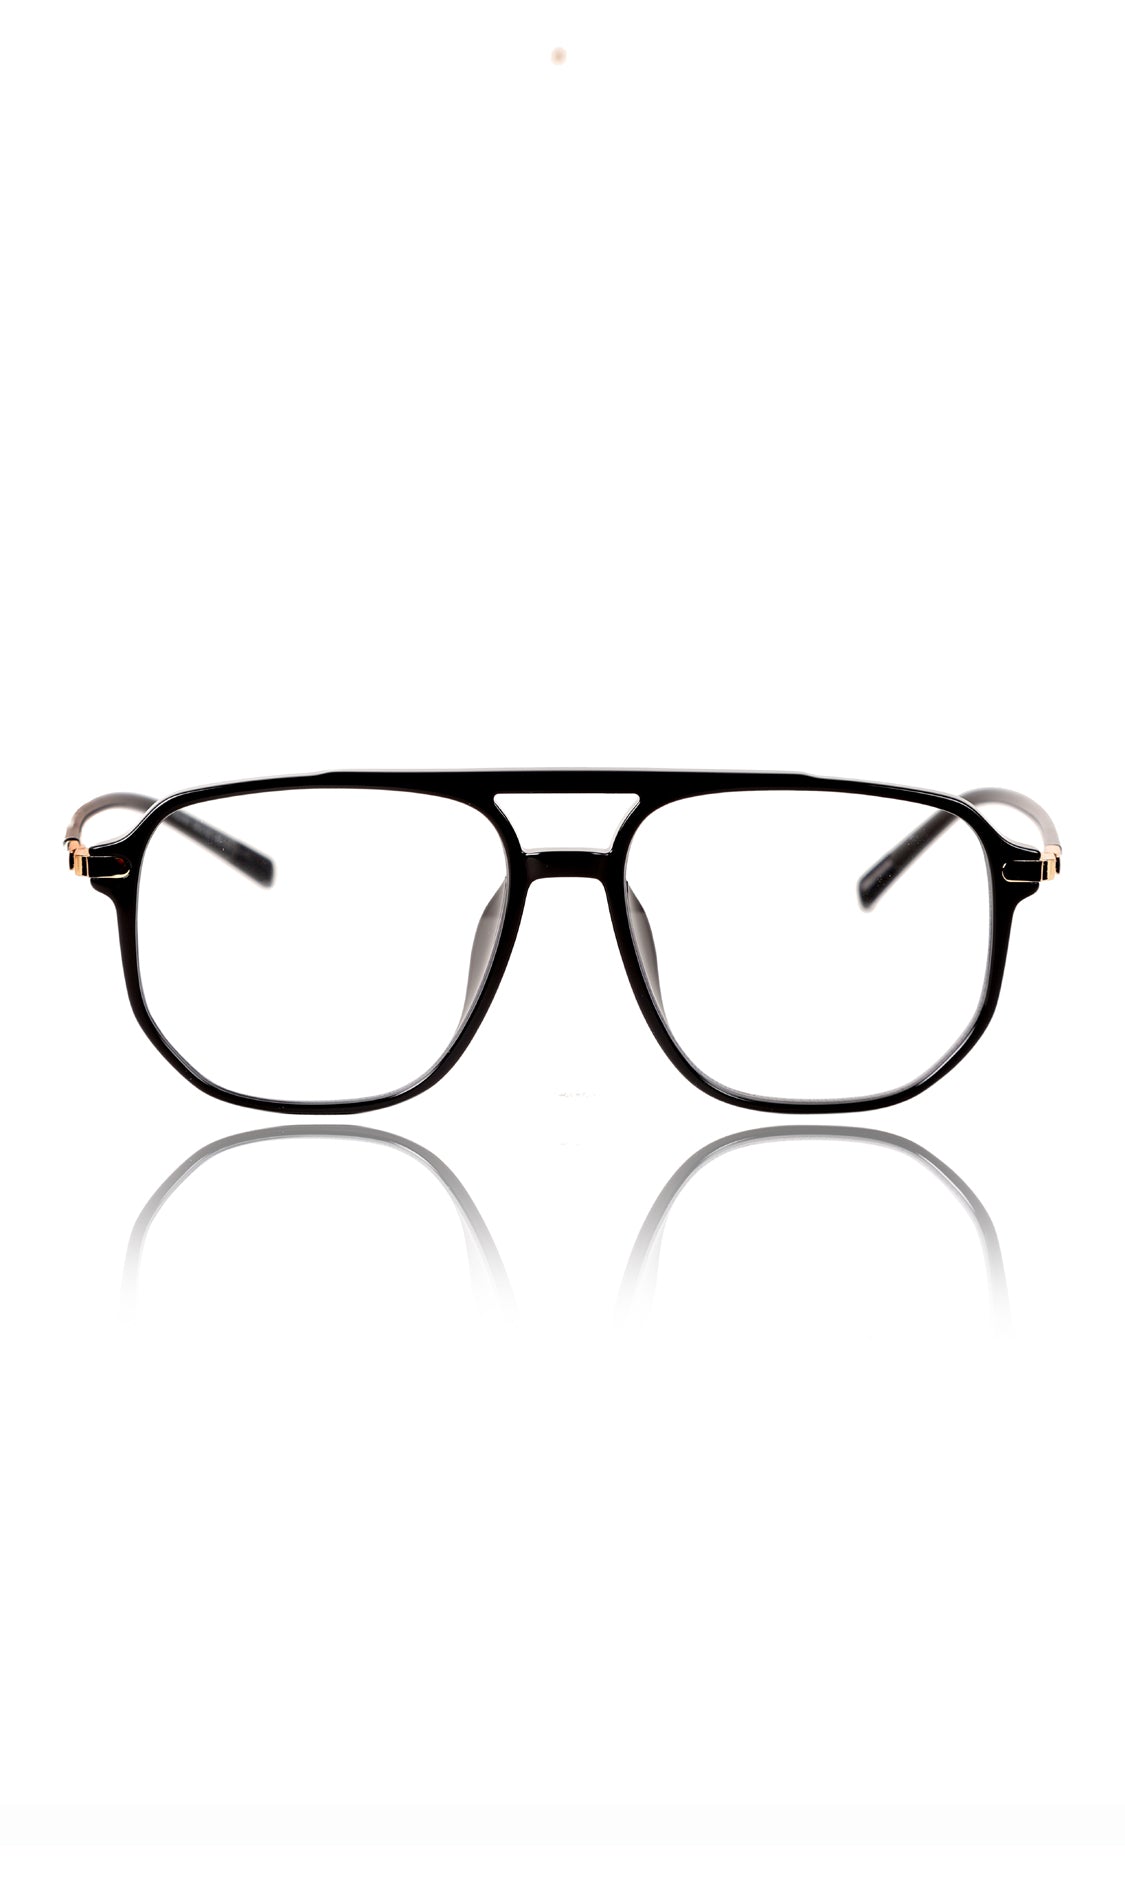 Jodykoes® Premium Oversized Eyeglass Frames: Stylish Anti-Glare and Blue Light Blocking Glasses for Enhanced Computer and Mobile Phone Protection, Unisex Design (Black)